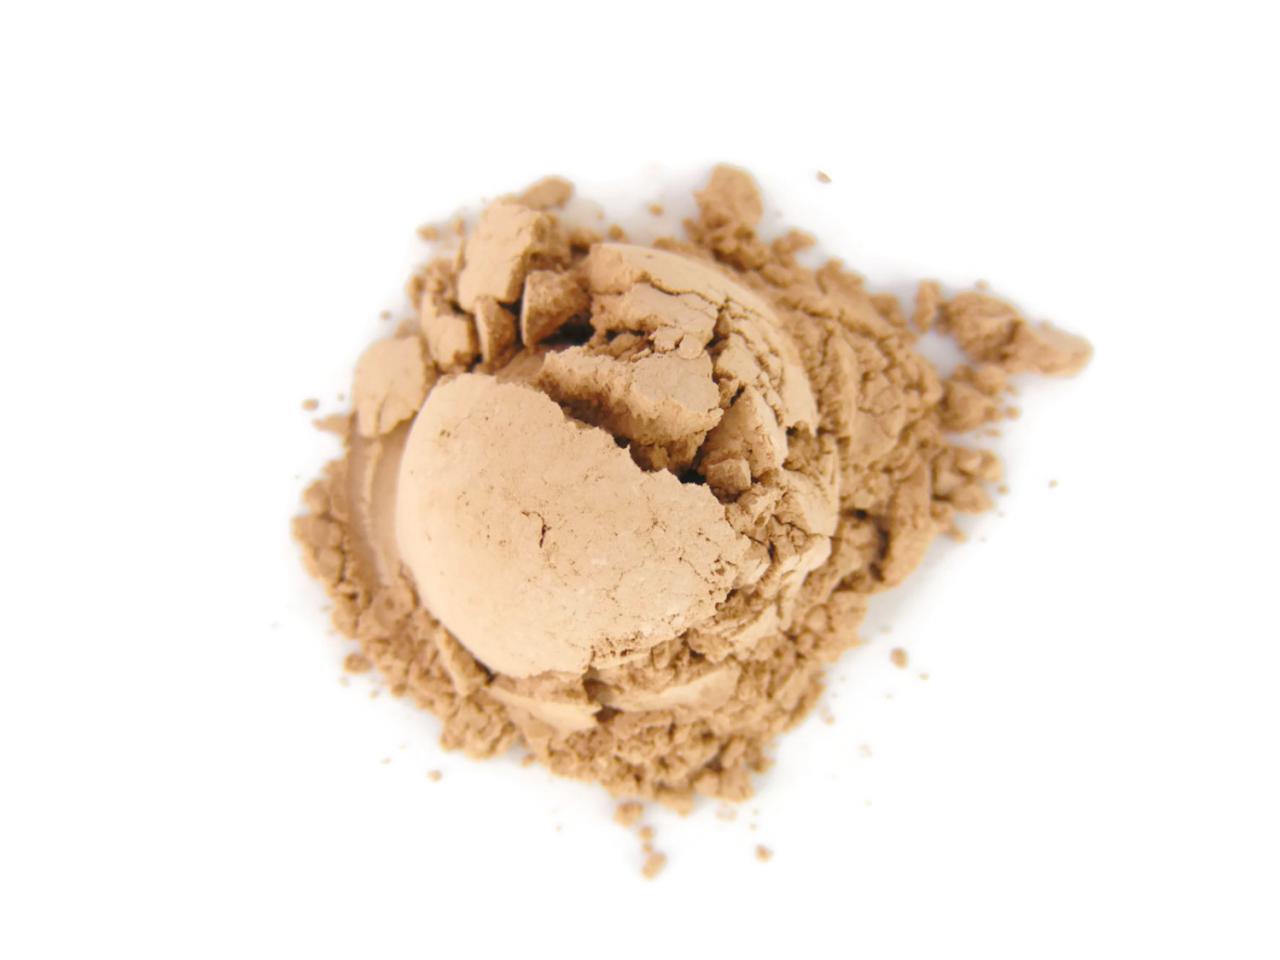 Mineral Foundation, Natural Makeup, Vegan Matte Foundation - Warm Sand - Medium